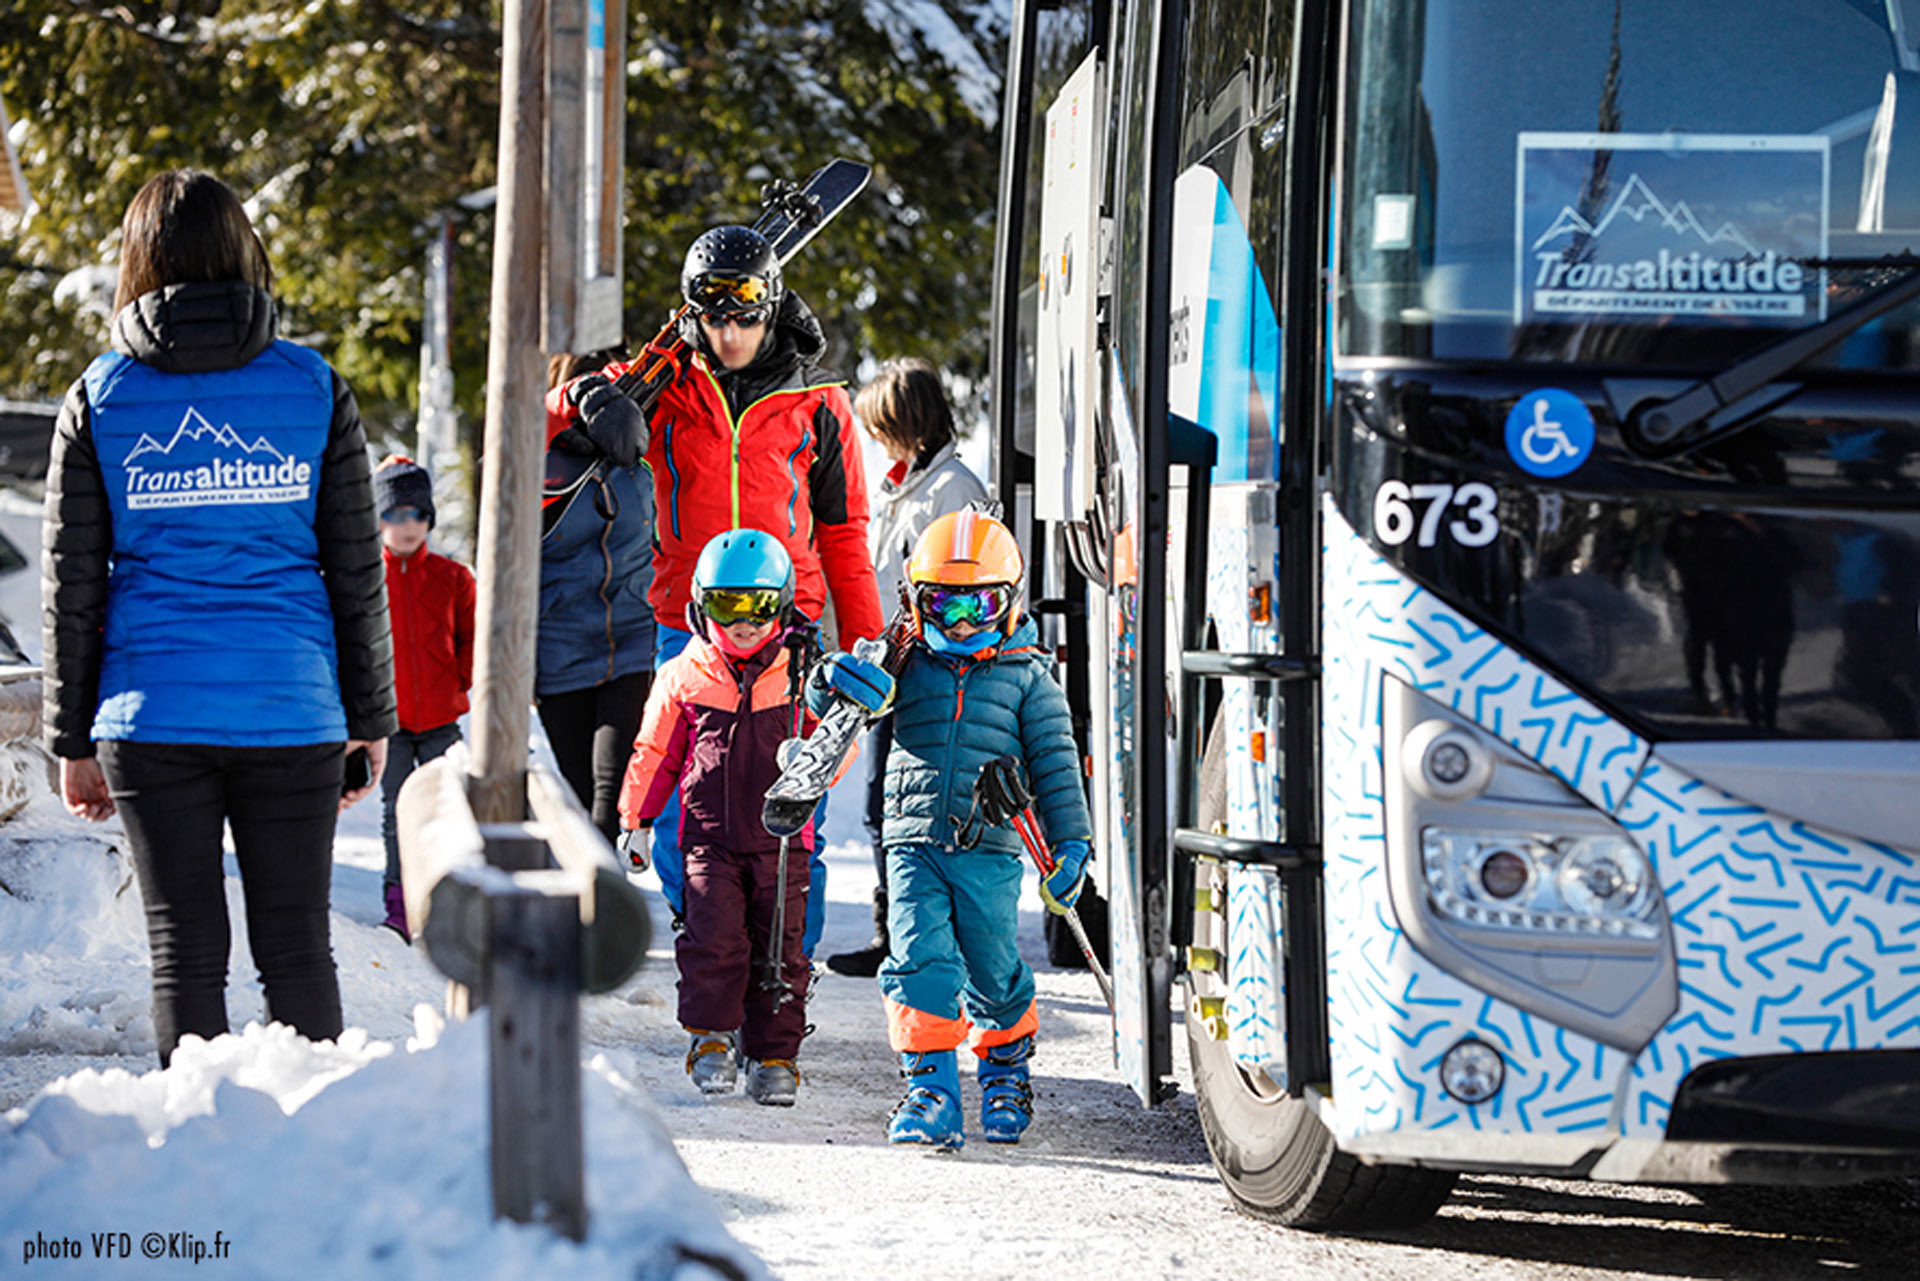 Chamrousse ski resort Transaltitude bus line